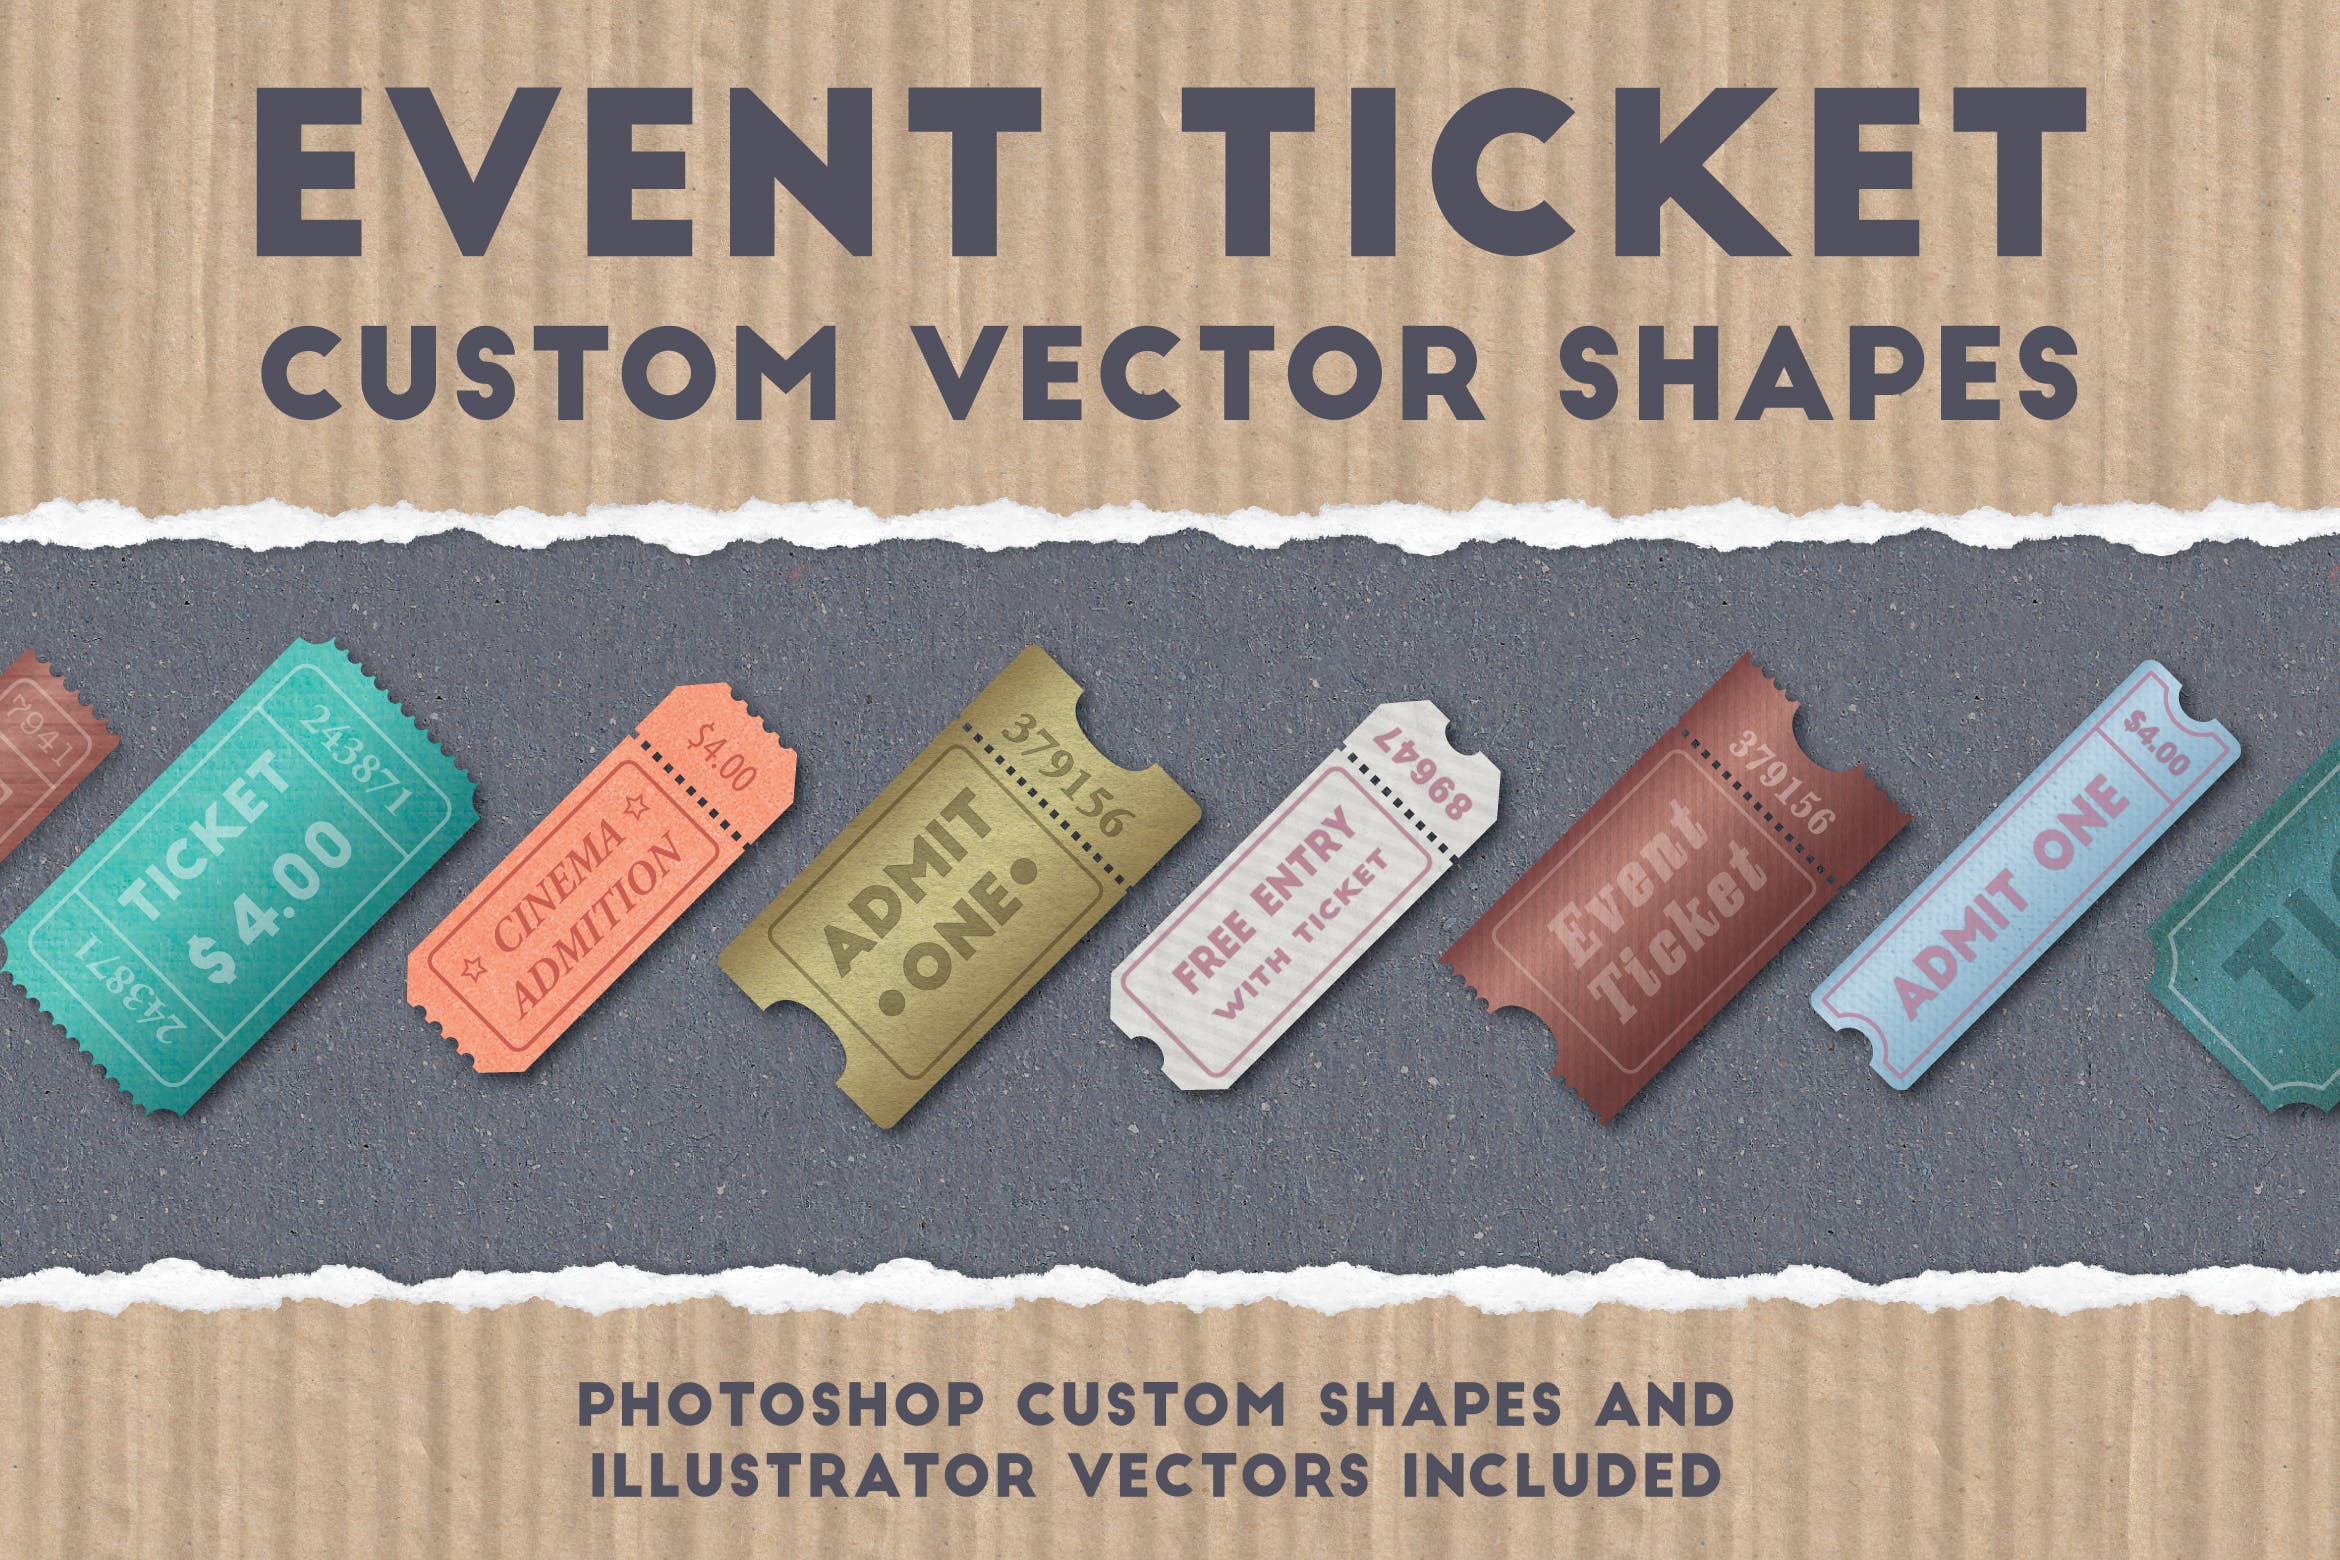 门票票据矢量设计图形素材 Event Ticket Custom Vector Shapes插图